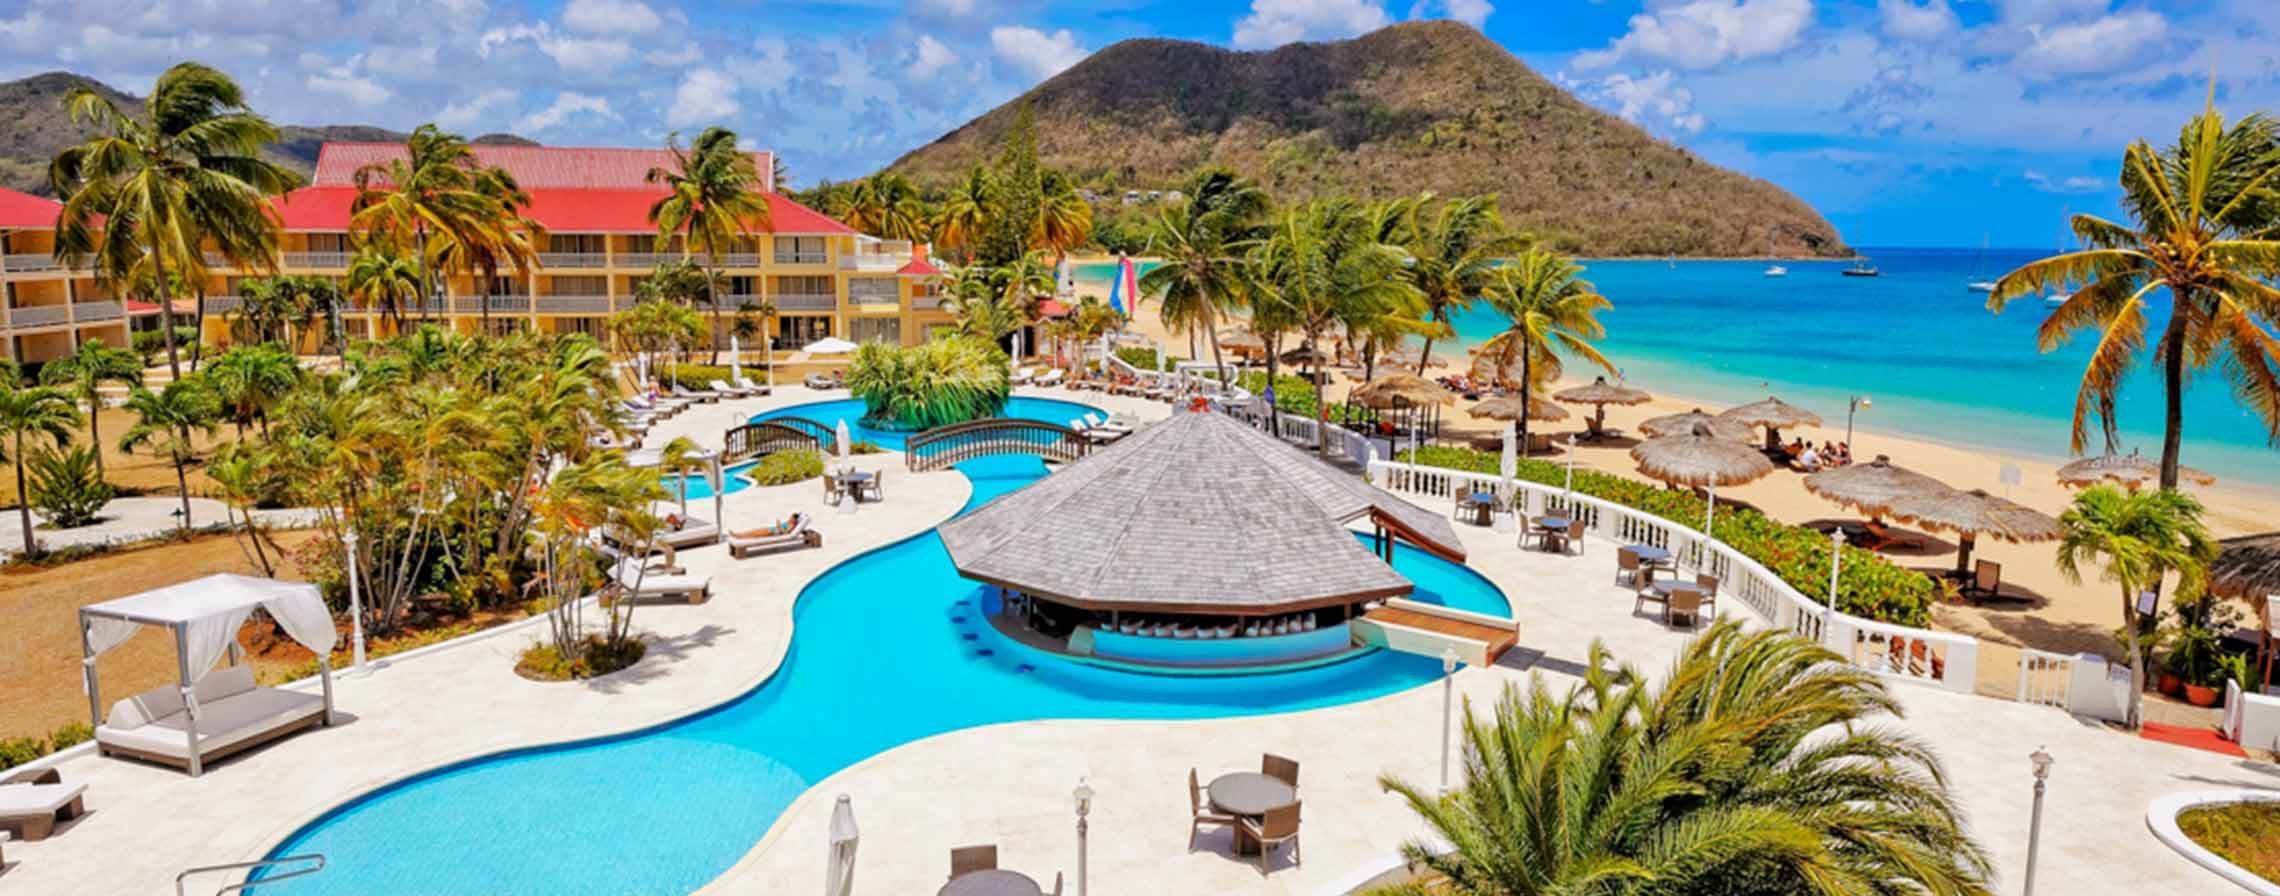 Property image of Mystique Royal St. Lucia Resort & Spa + Starfish Resort